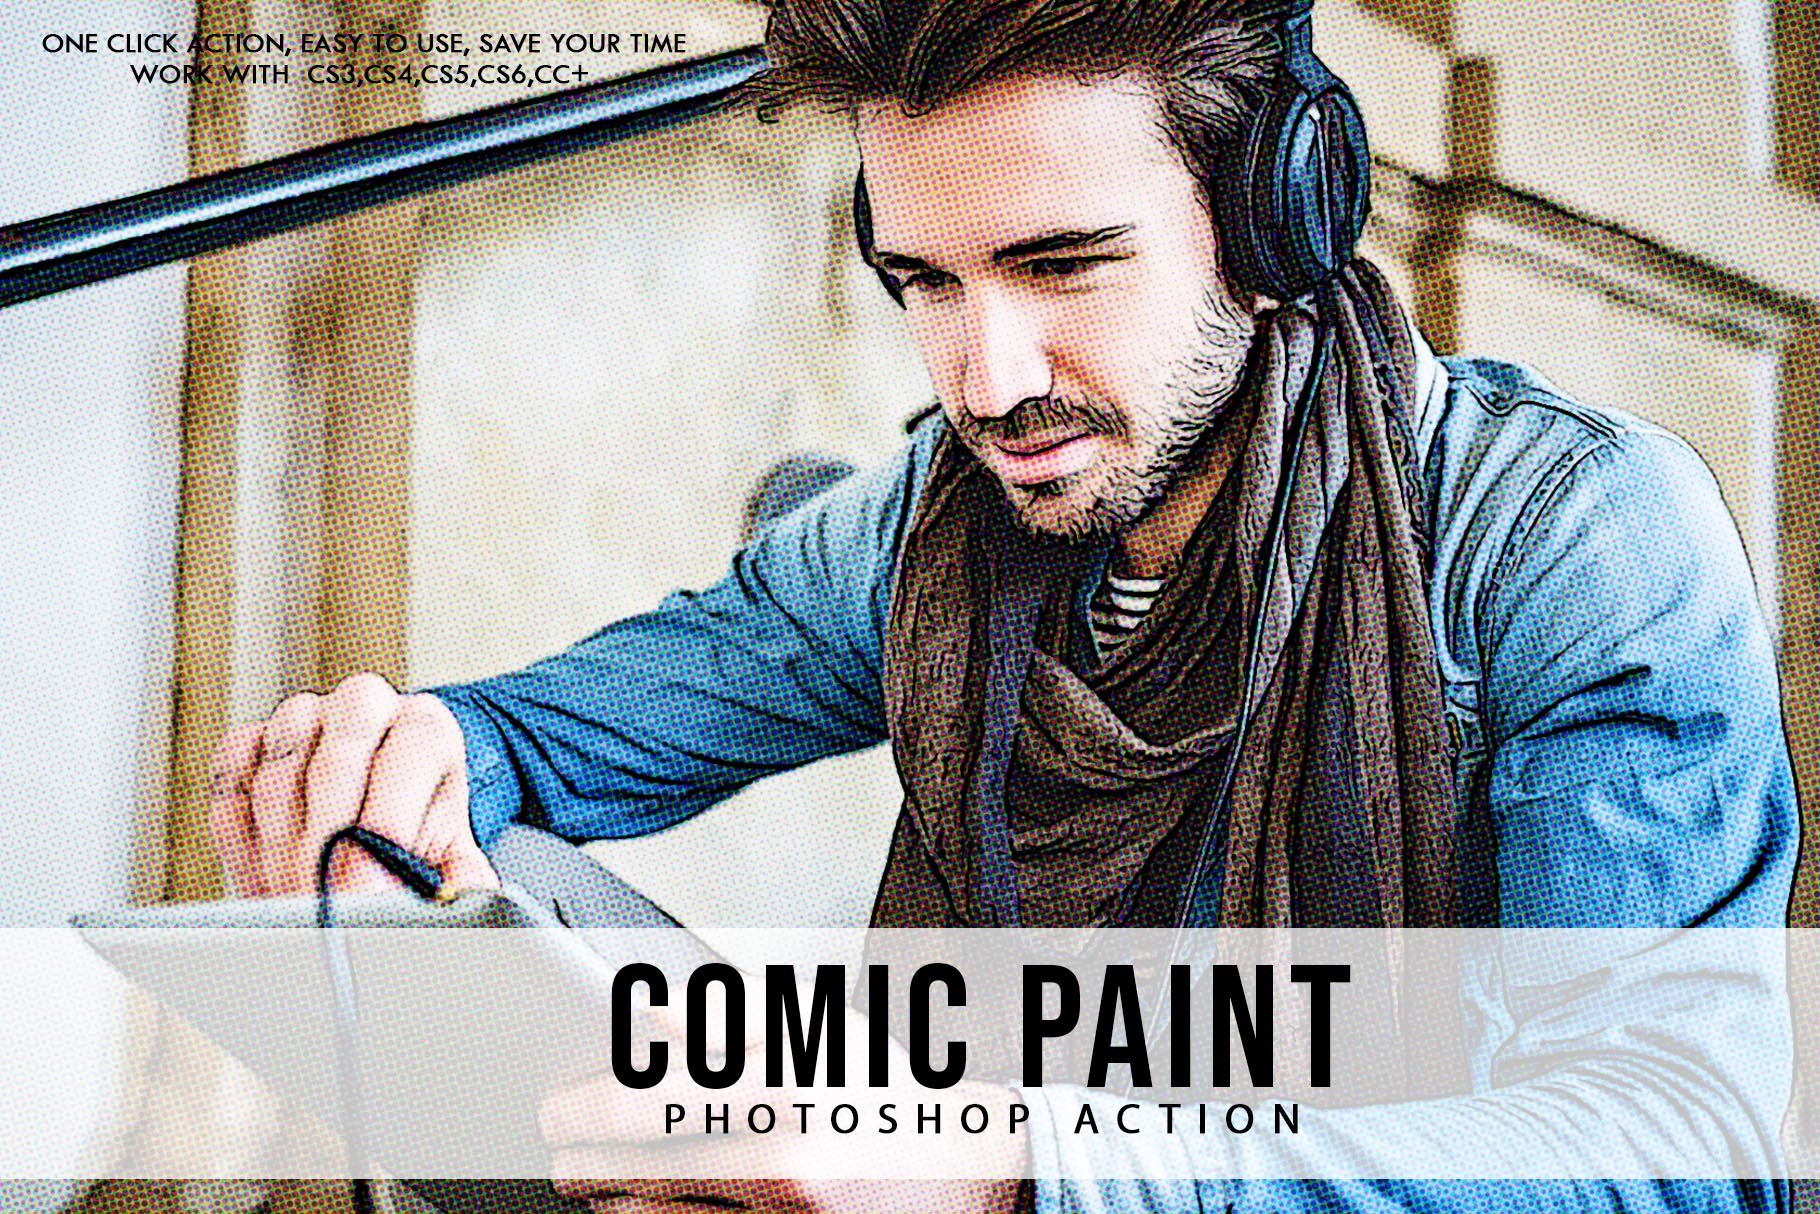 Comic Paint Photoshop Actioncover image.